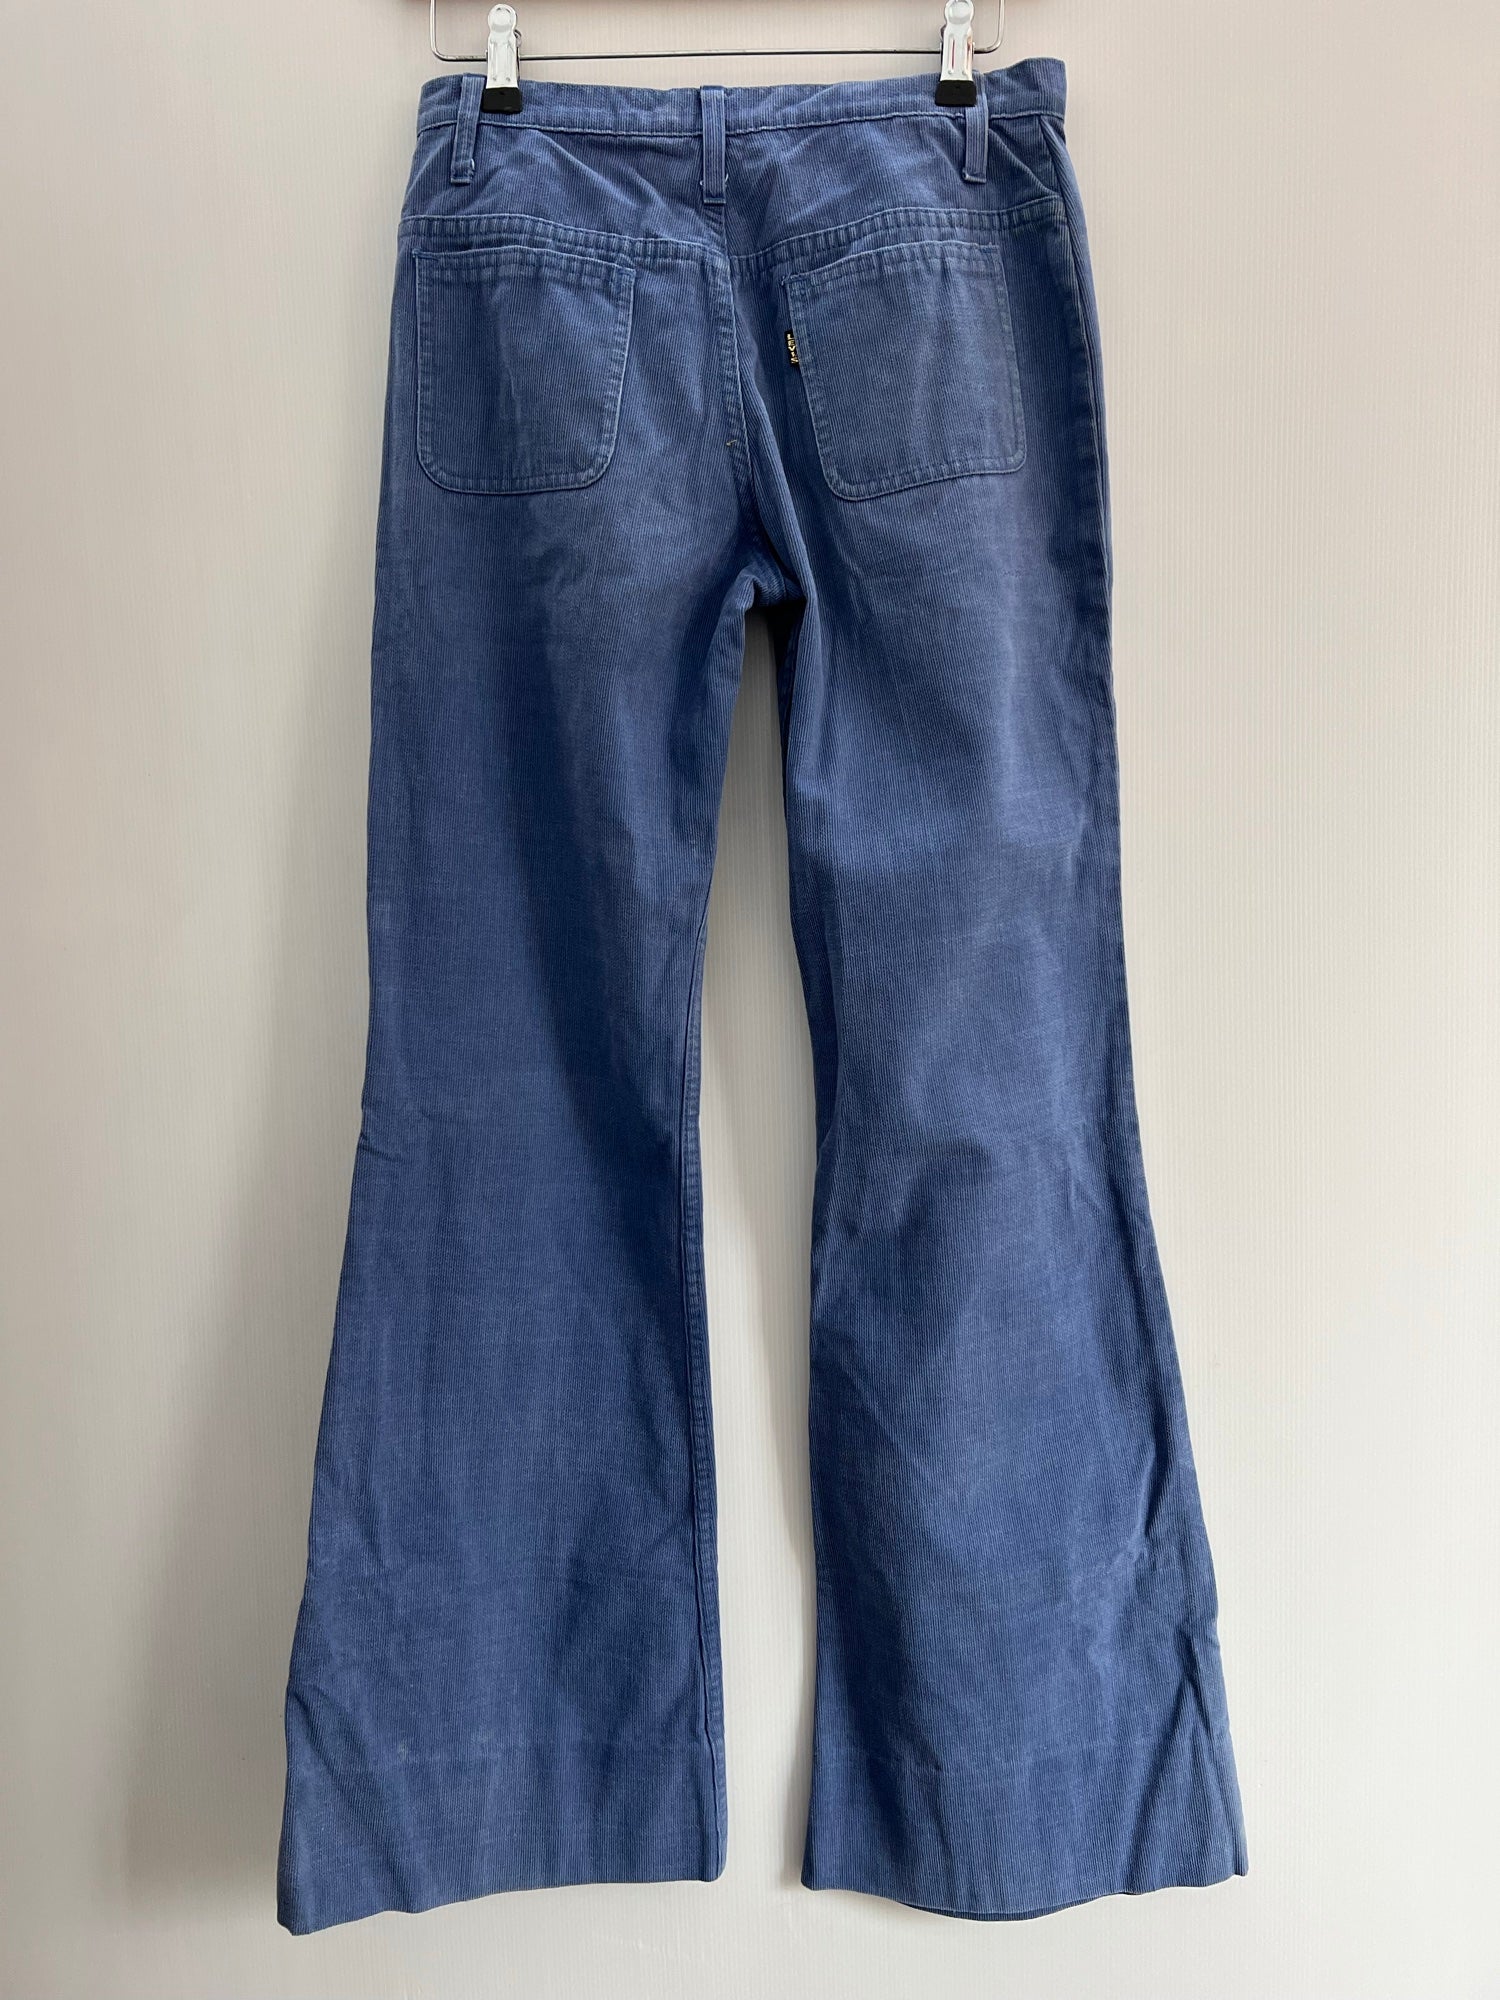 Vintage 1970s Miss Levis Big E Flared Cord Jeans in Blue - Size UK 8 W28  L30 - Womens Vintage Clothing - Urban Village – UrbanVillageVintage